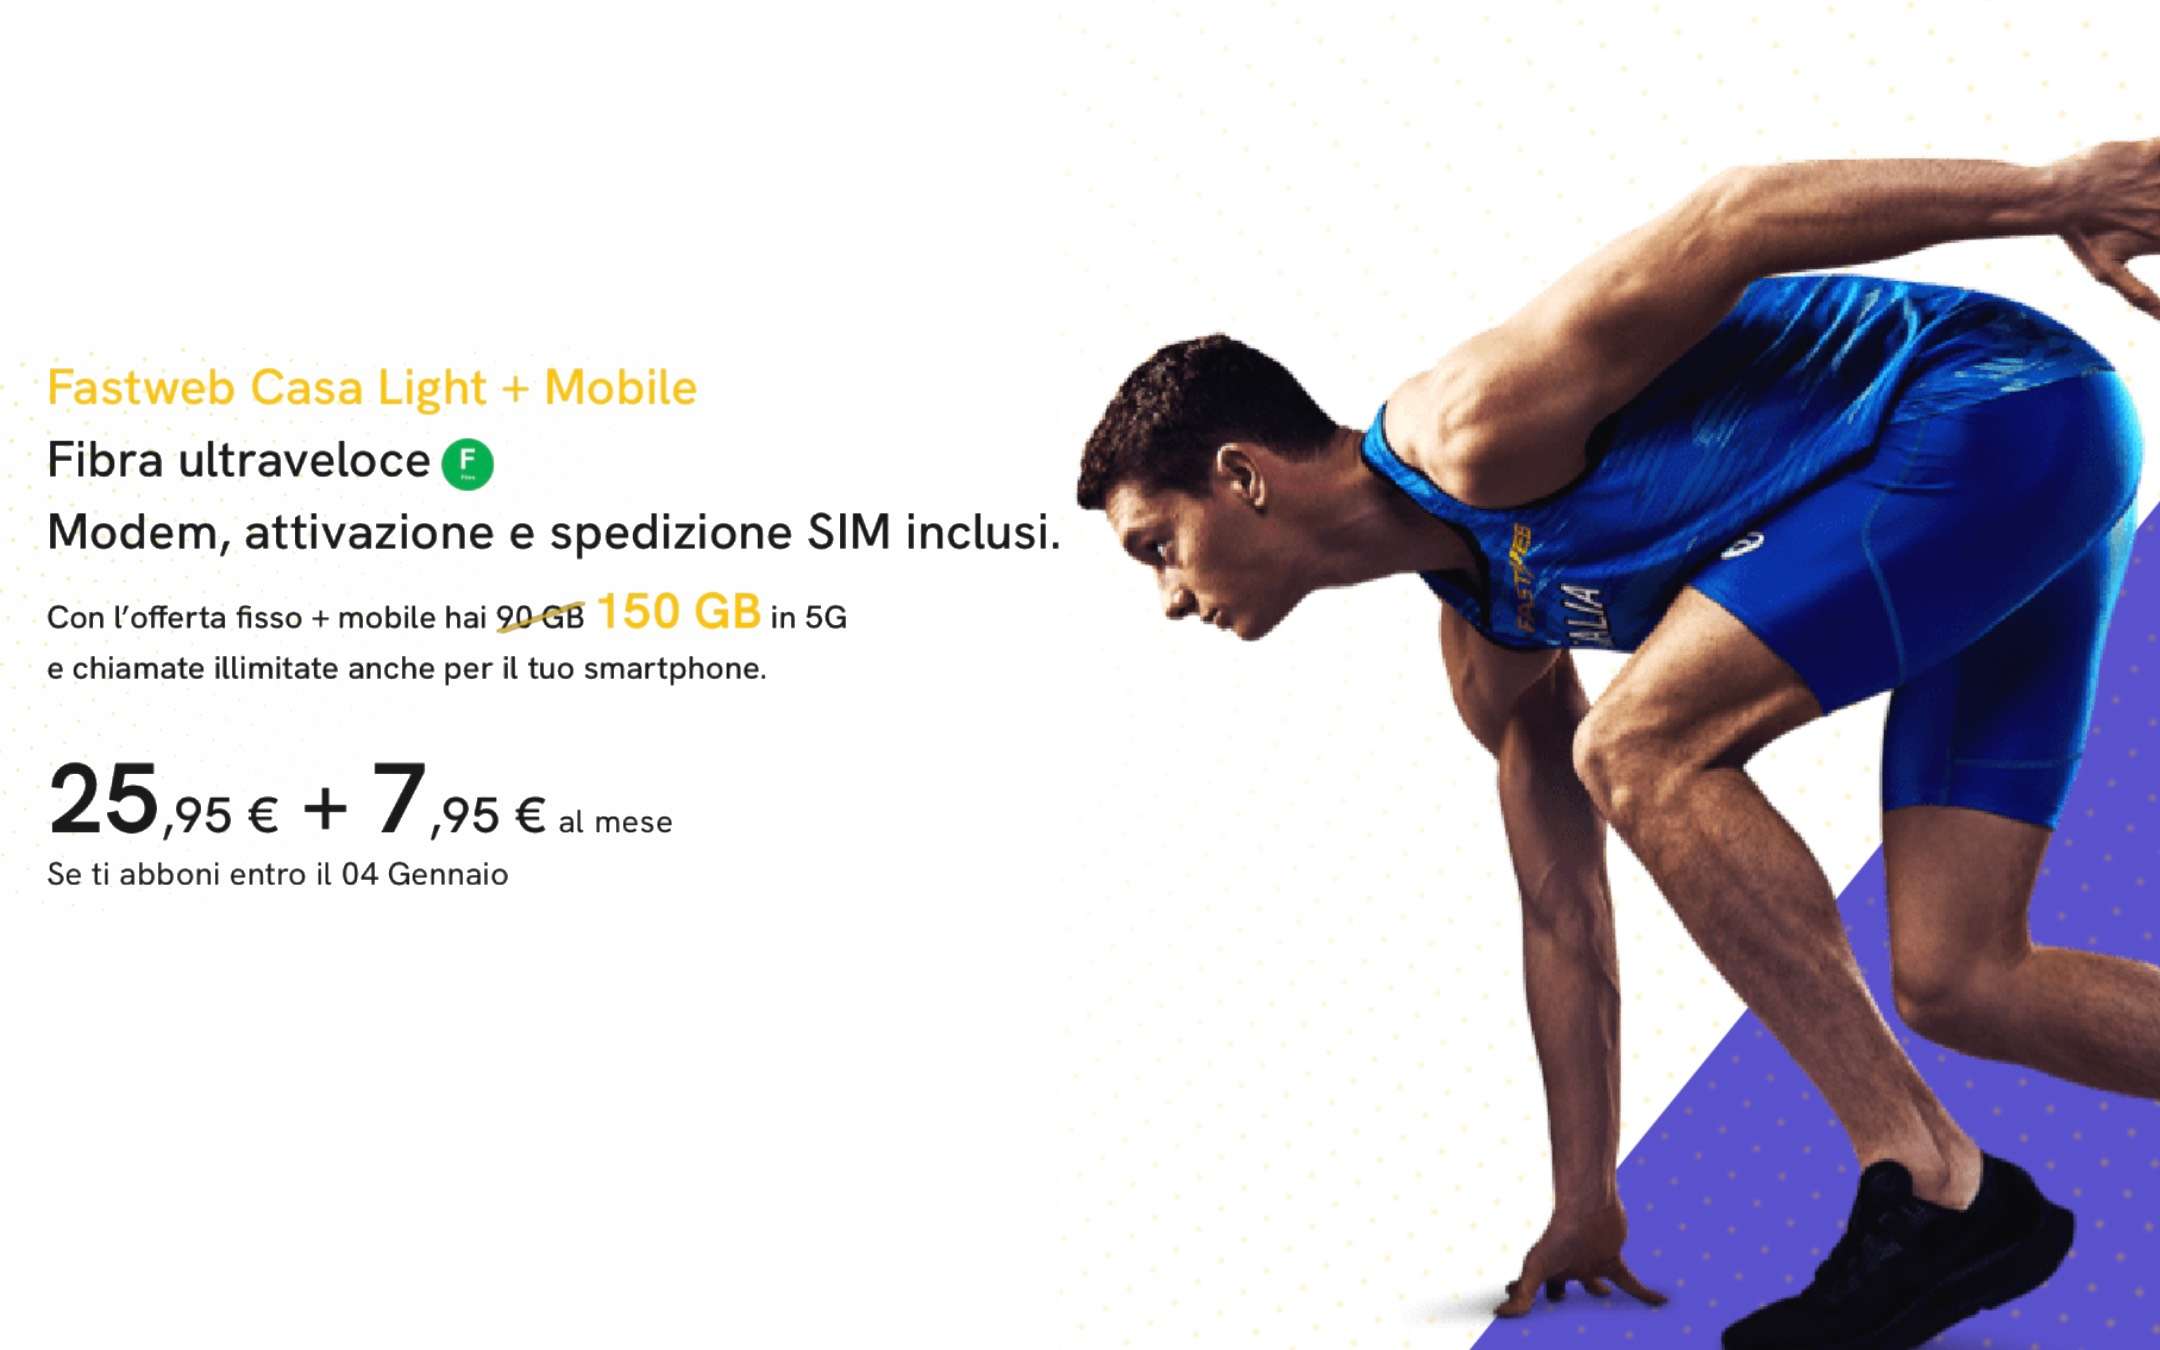 Fastweb Mobile Freedom: 150GB fino al 4 Gennaio!